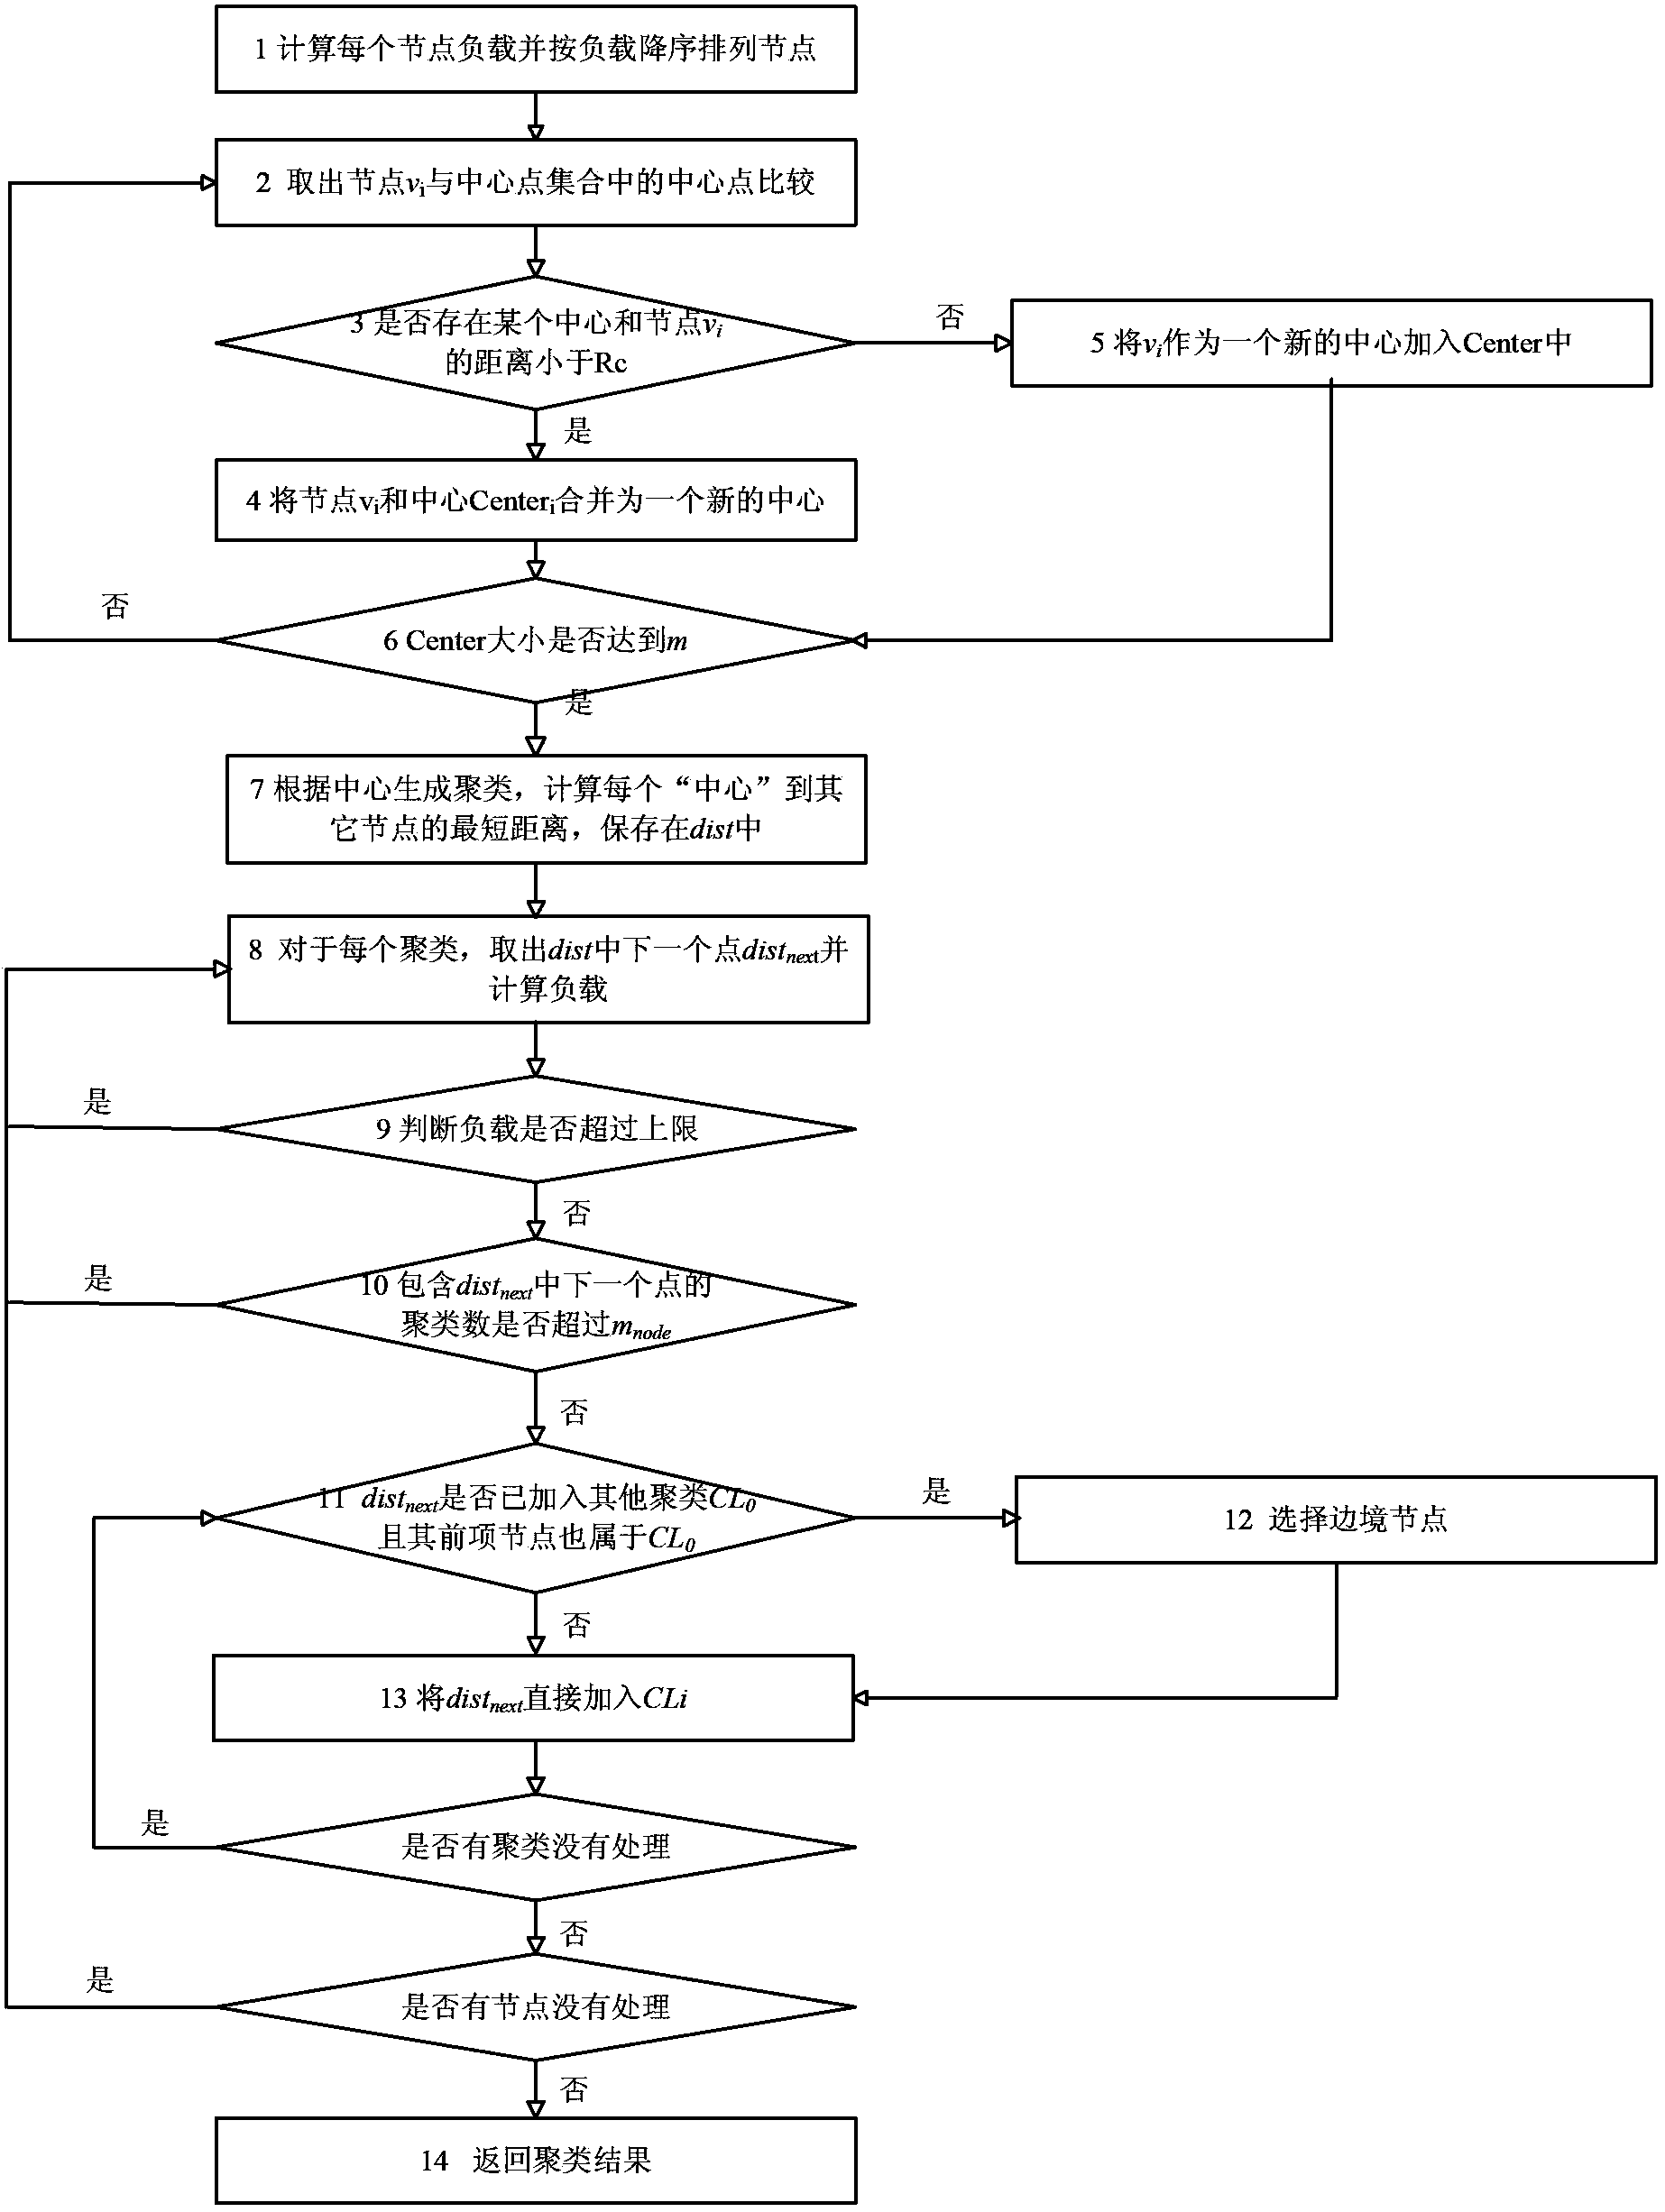 Distributed type reverse index organization method based on user log analysis